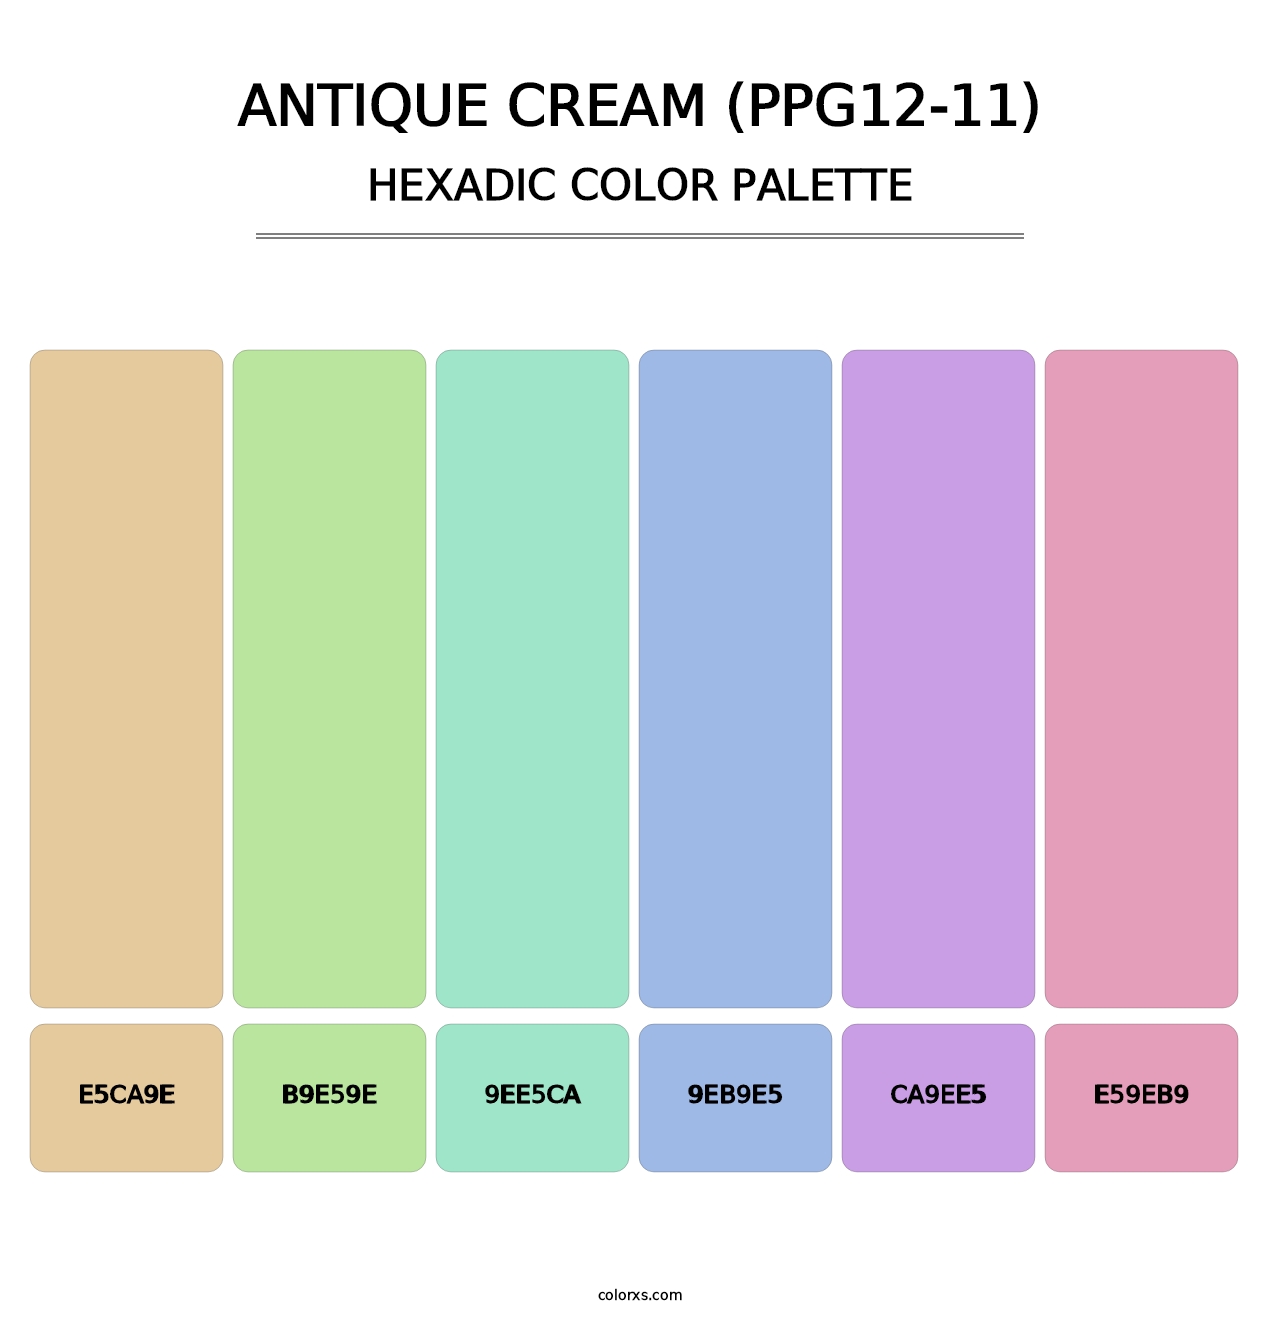 Antique Cream (PPG12-11) - Hexadic Color Palette